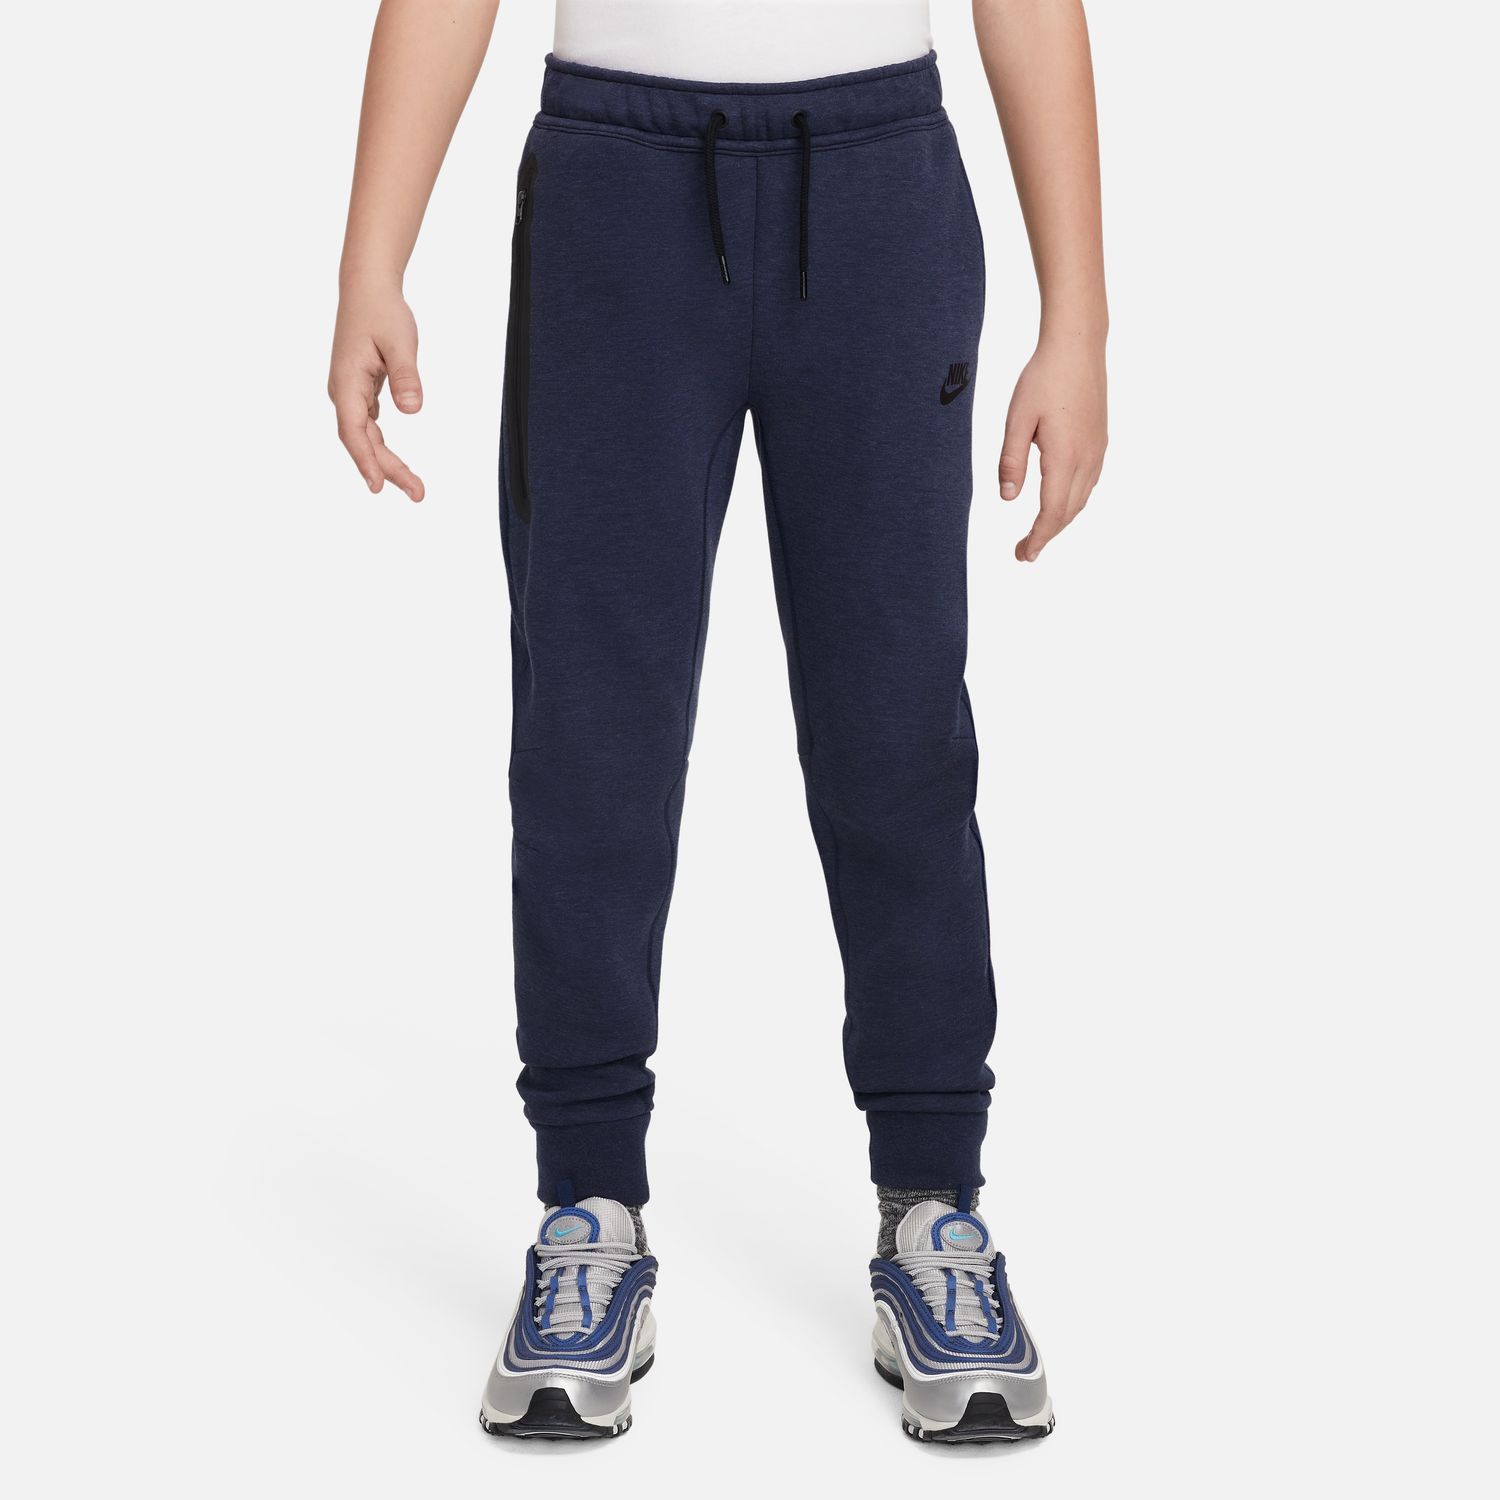 Nike B NSW TECH FLC PANT, otroške hlače, modra | Intersport